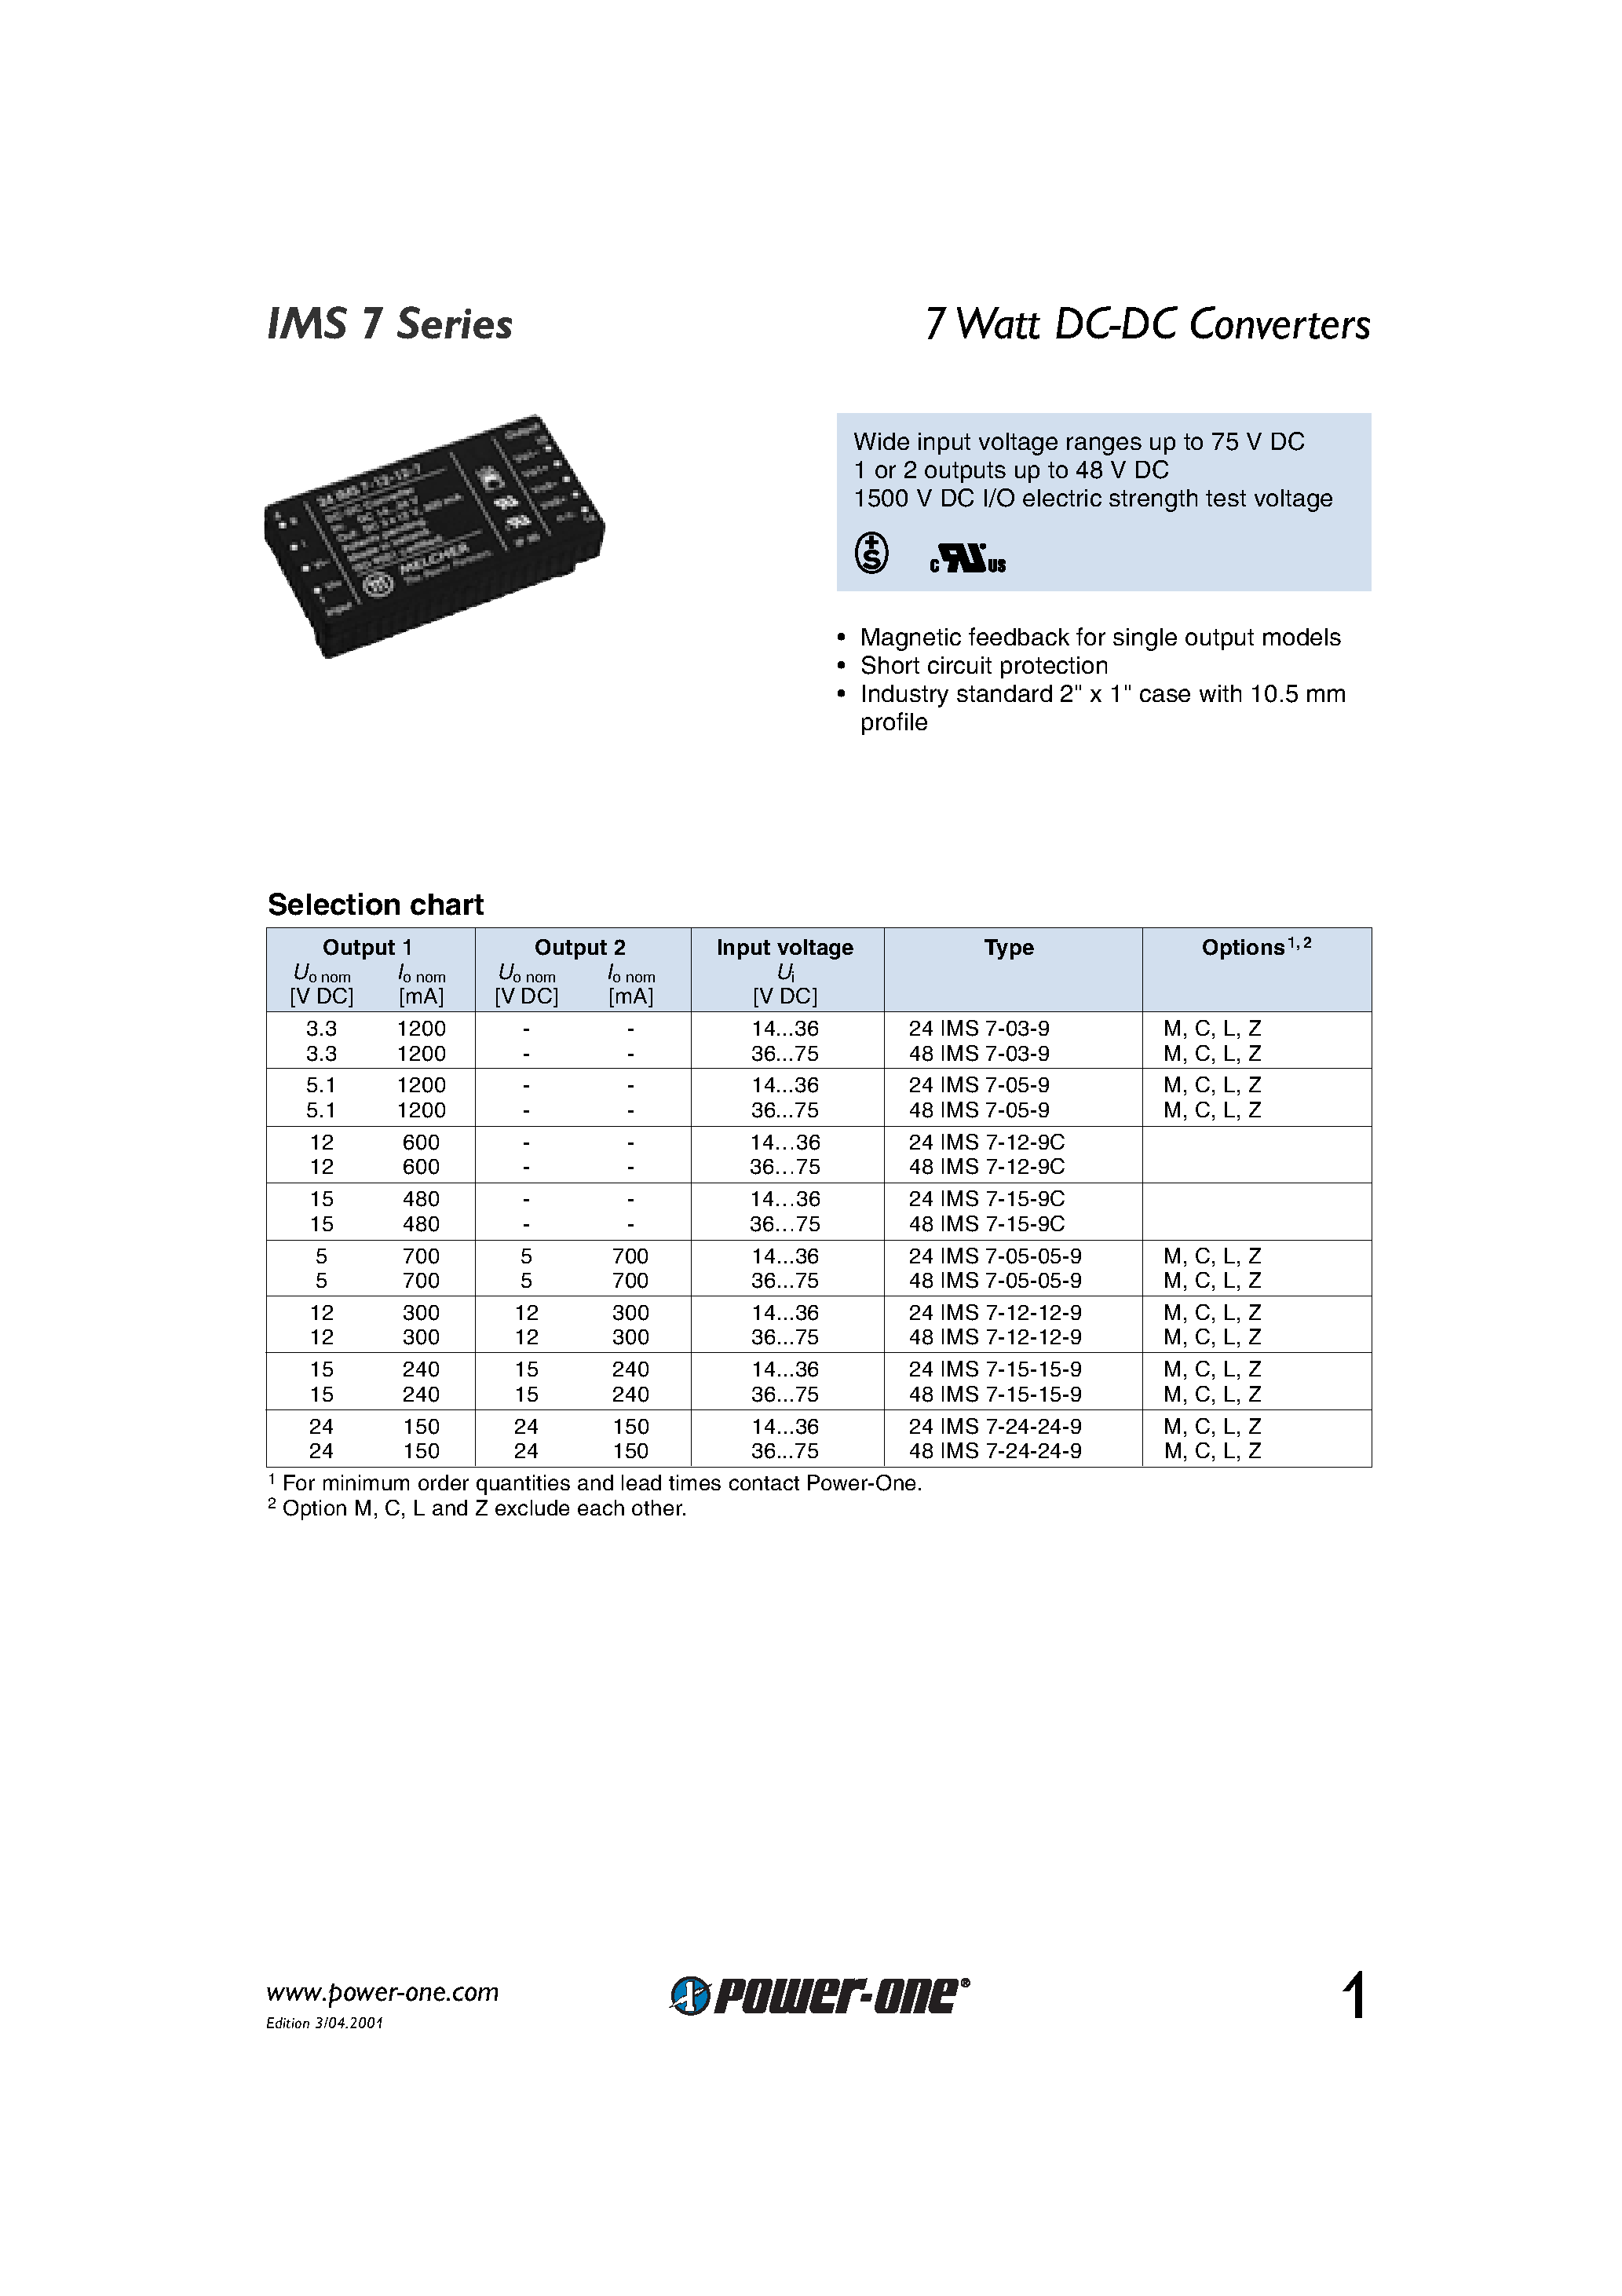 Datasheet 48IMS7-12-12-9 - 7 Watt DC-DC Converters page 1